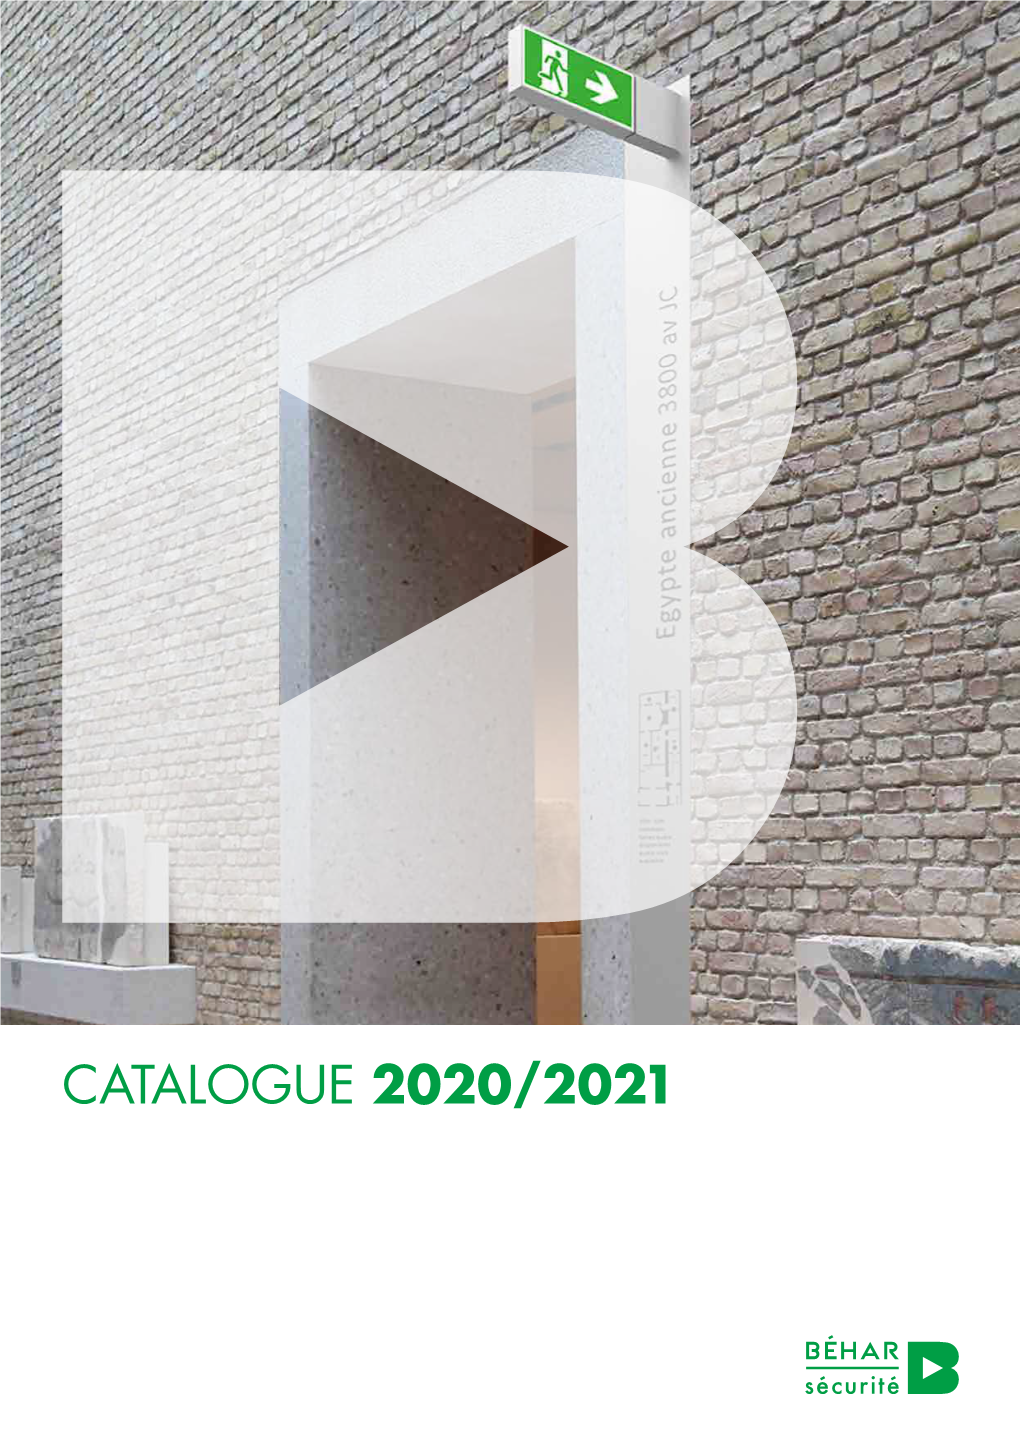 Catalogue 2020/2021 Introduction